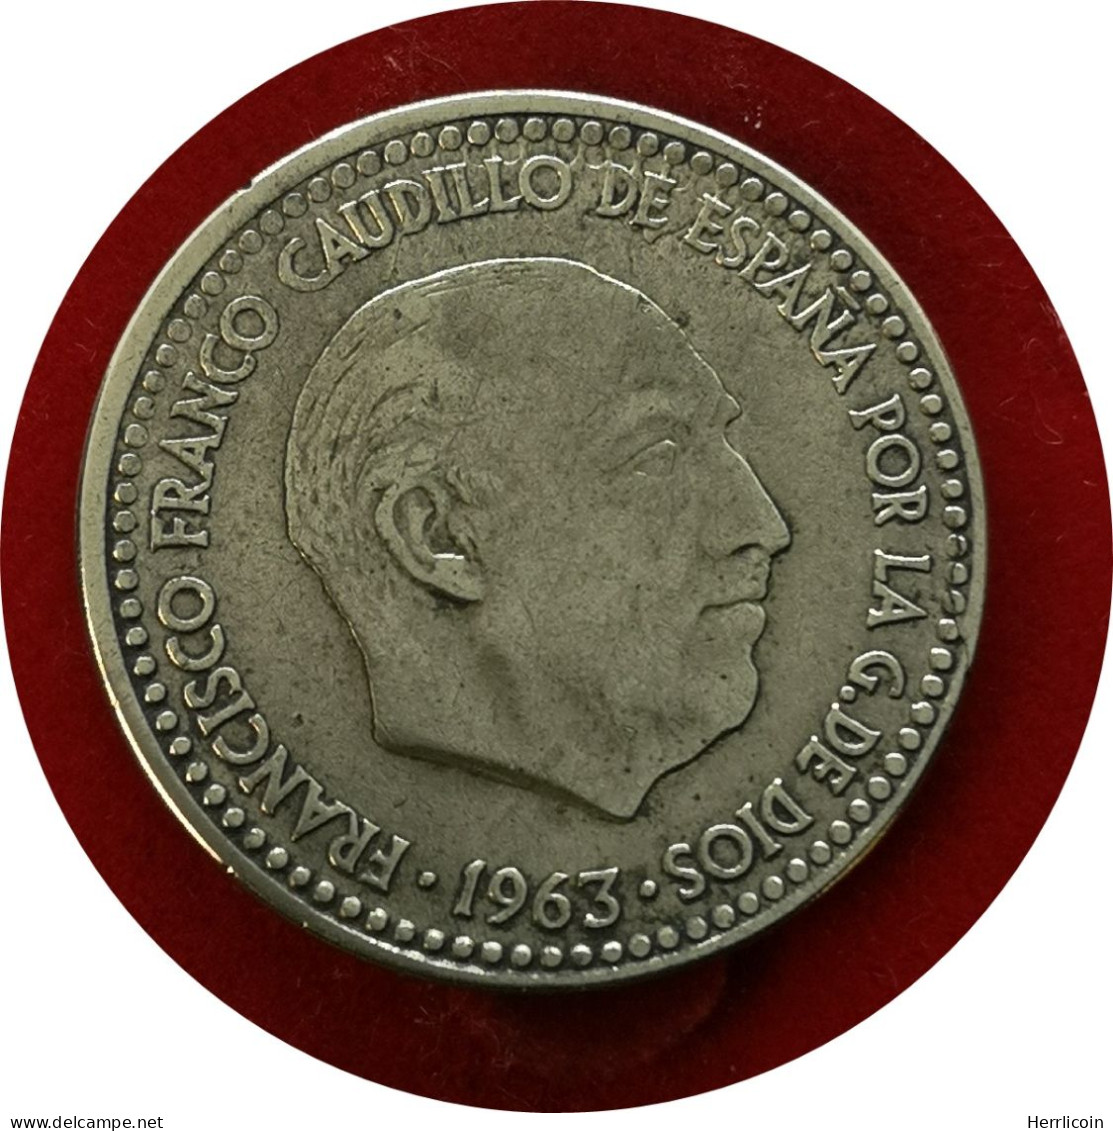 Monnaie Espagne - 1964 - 1 Peseta Franco 1re Effigie - 1 Peseta